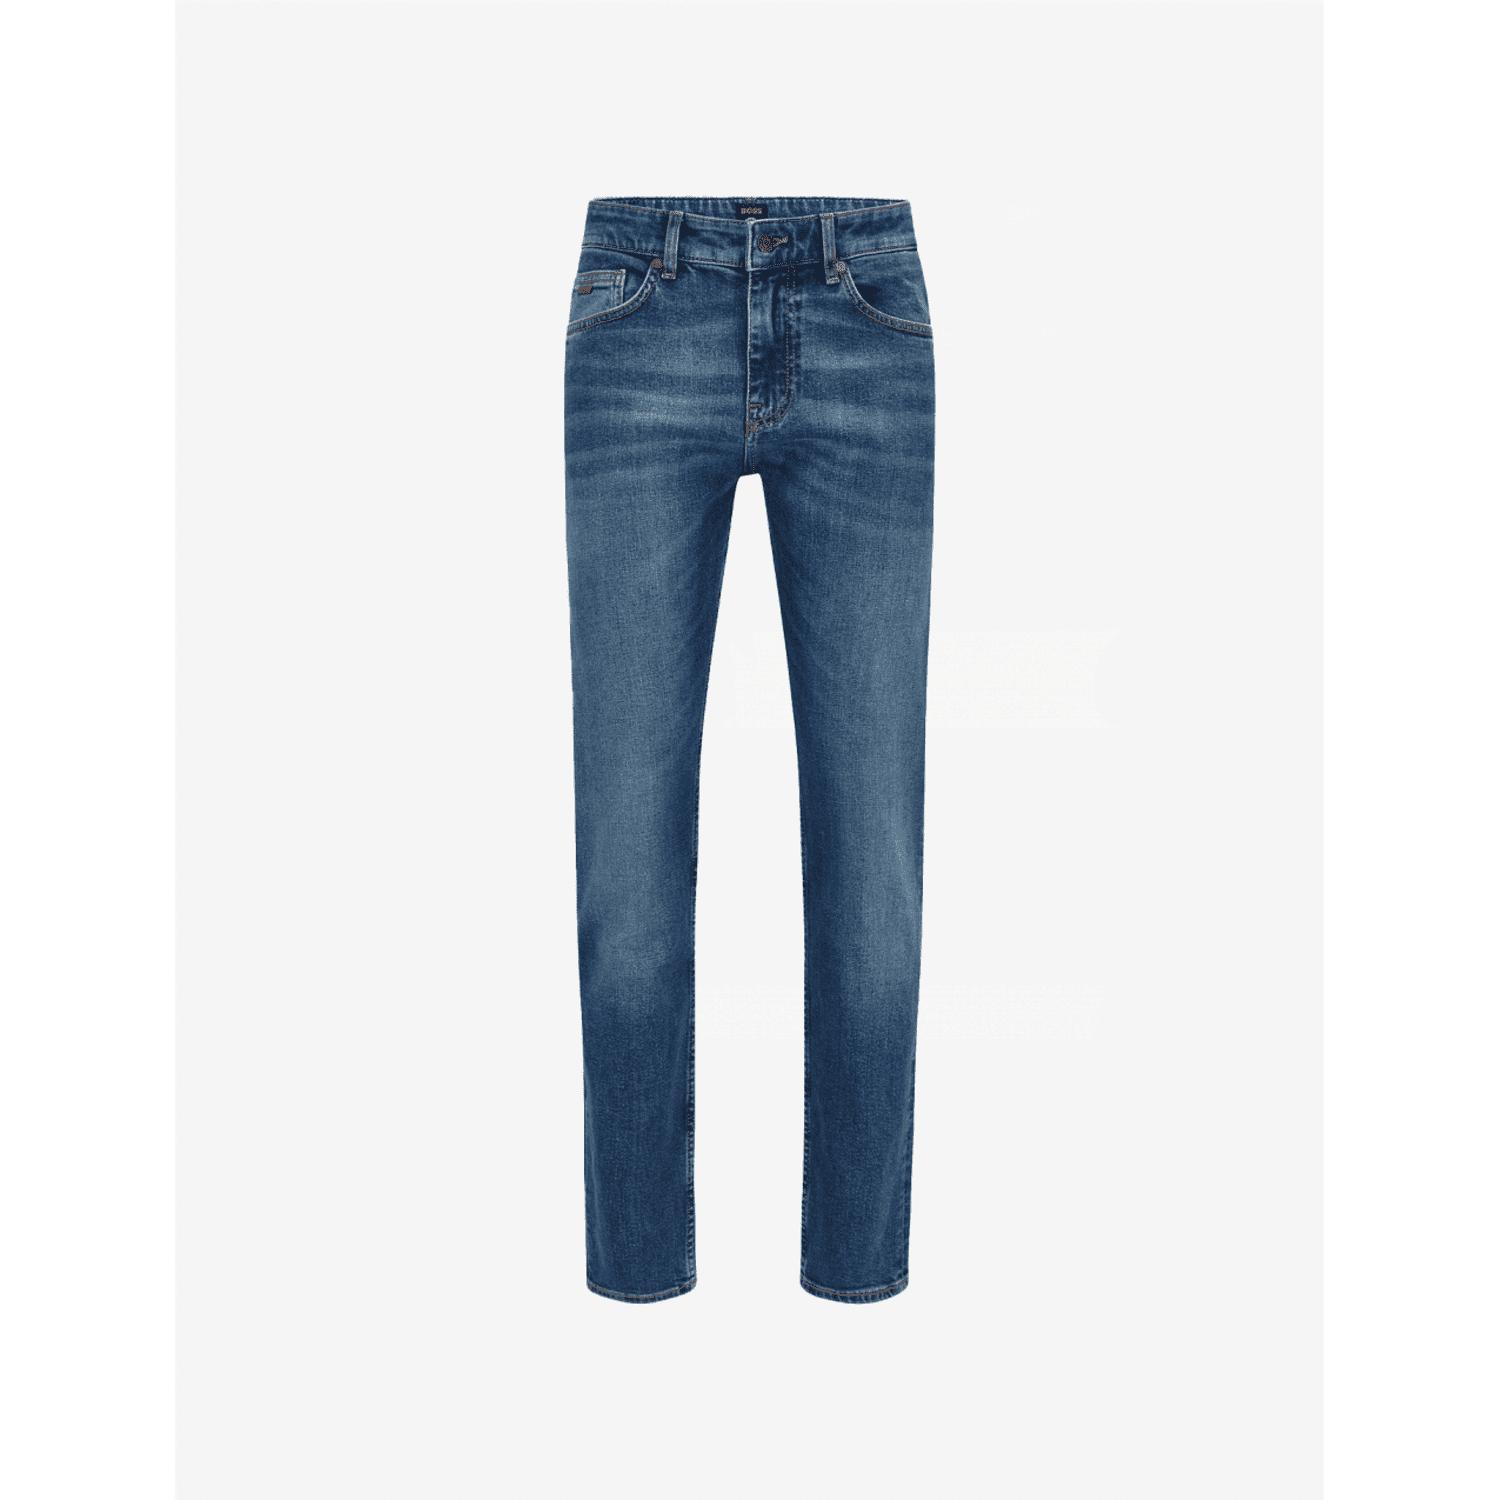 BOSS by HUGO BOSS Delaware Bc-l-c Jeans Col: 420 Medium Blue, Size: 34/32